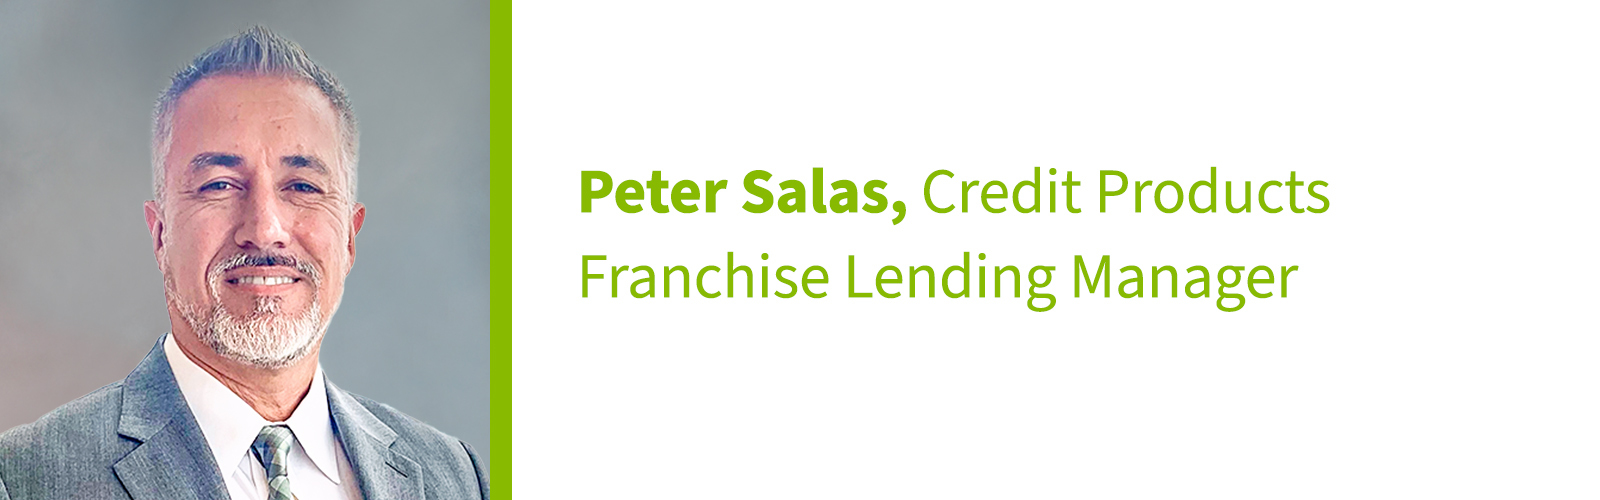 Peter Salas, Credit Products Franchise Lending Manager